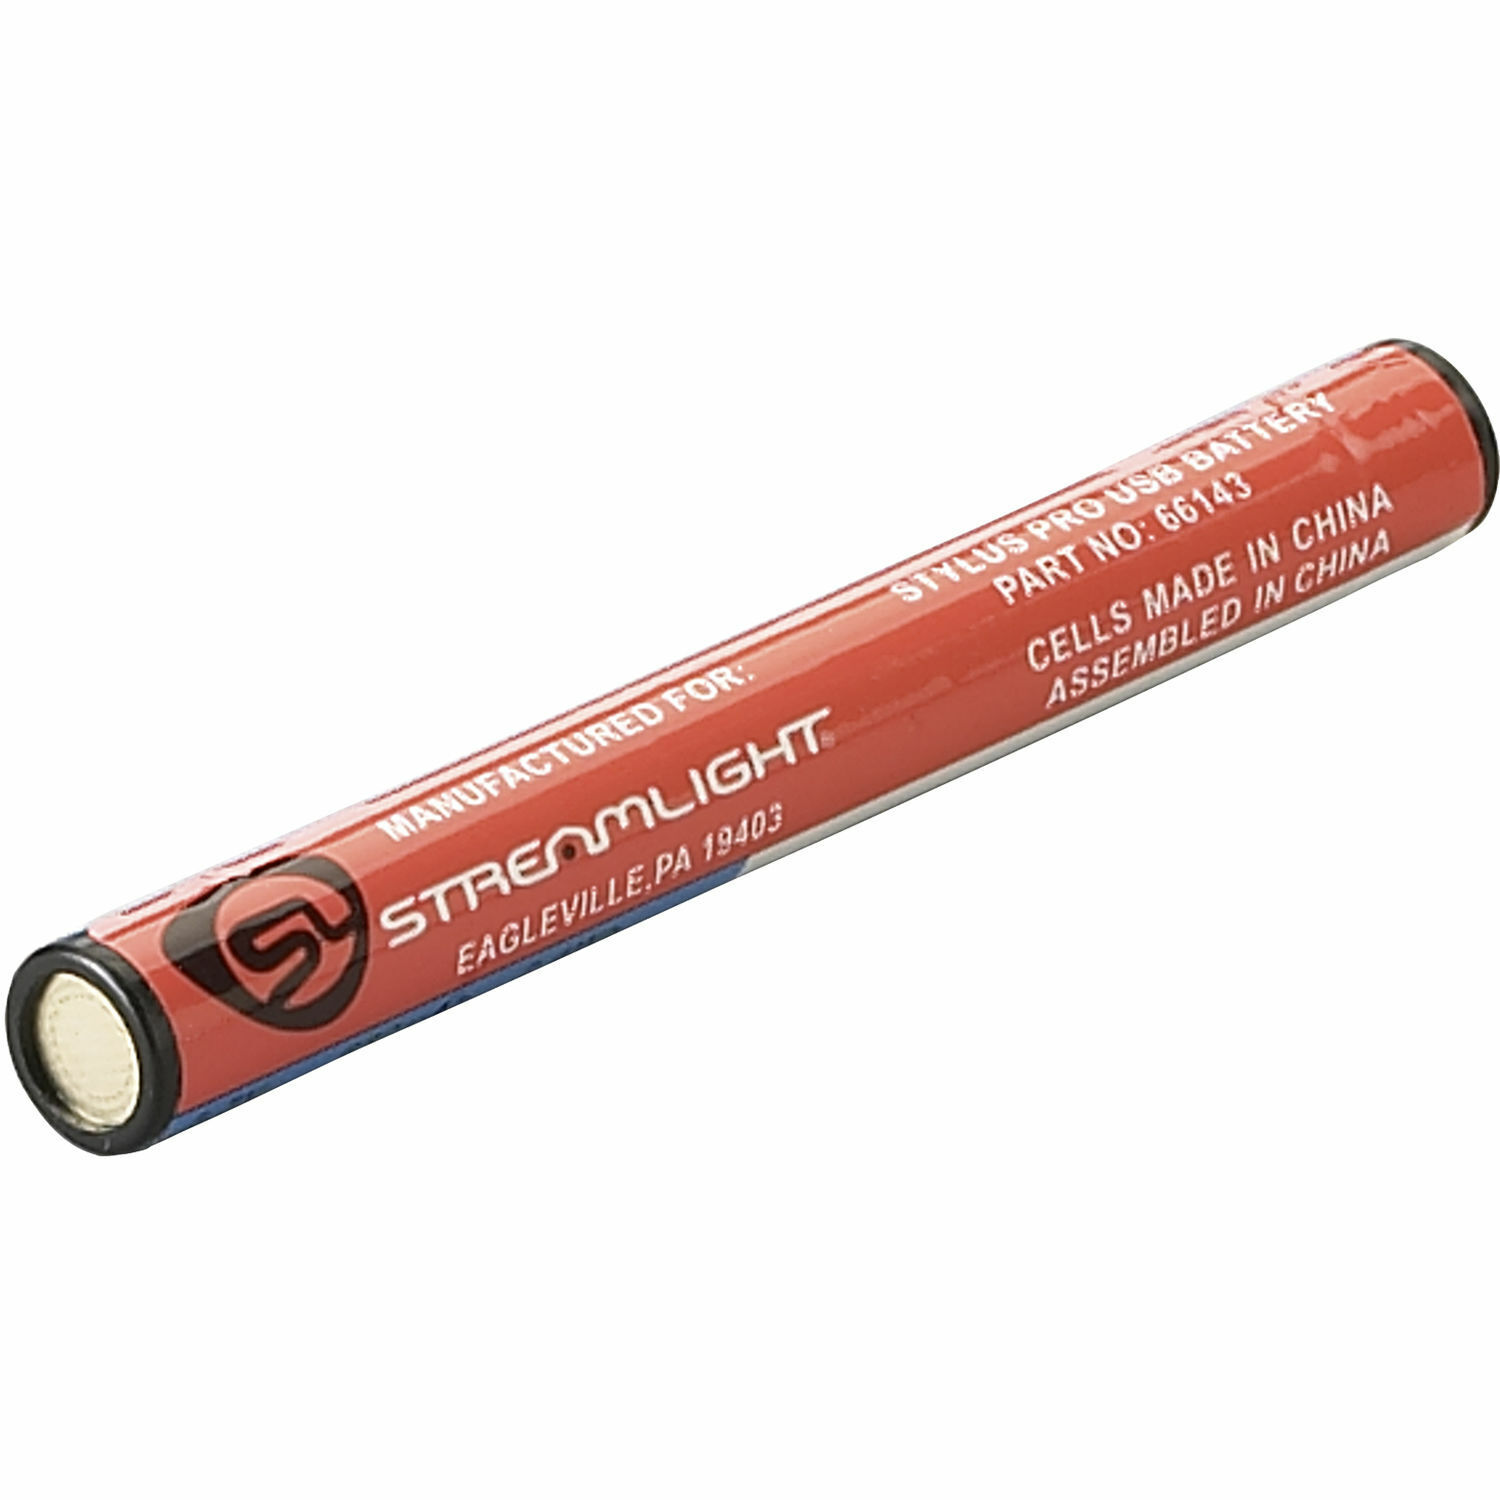 Streamlight 66143 battery for Stylus Pro, UV Penlights + 22079 5 USB Cord